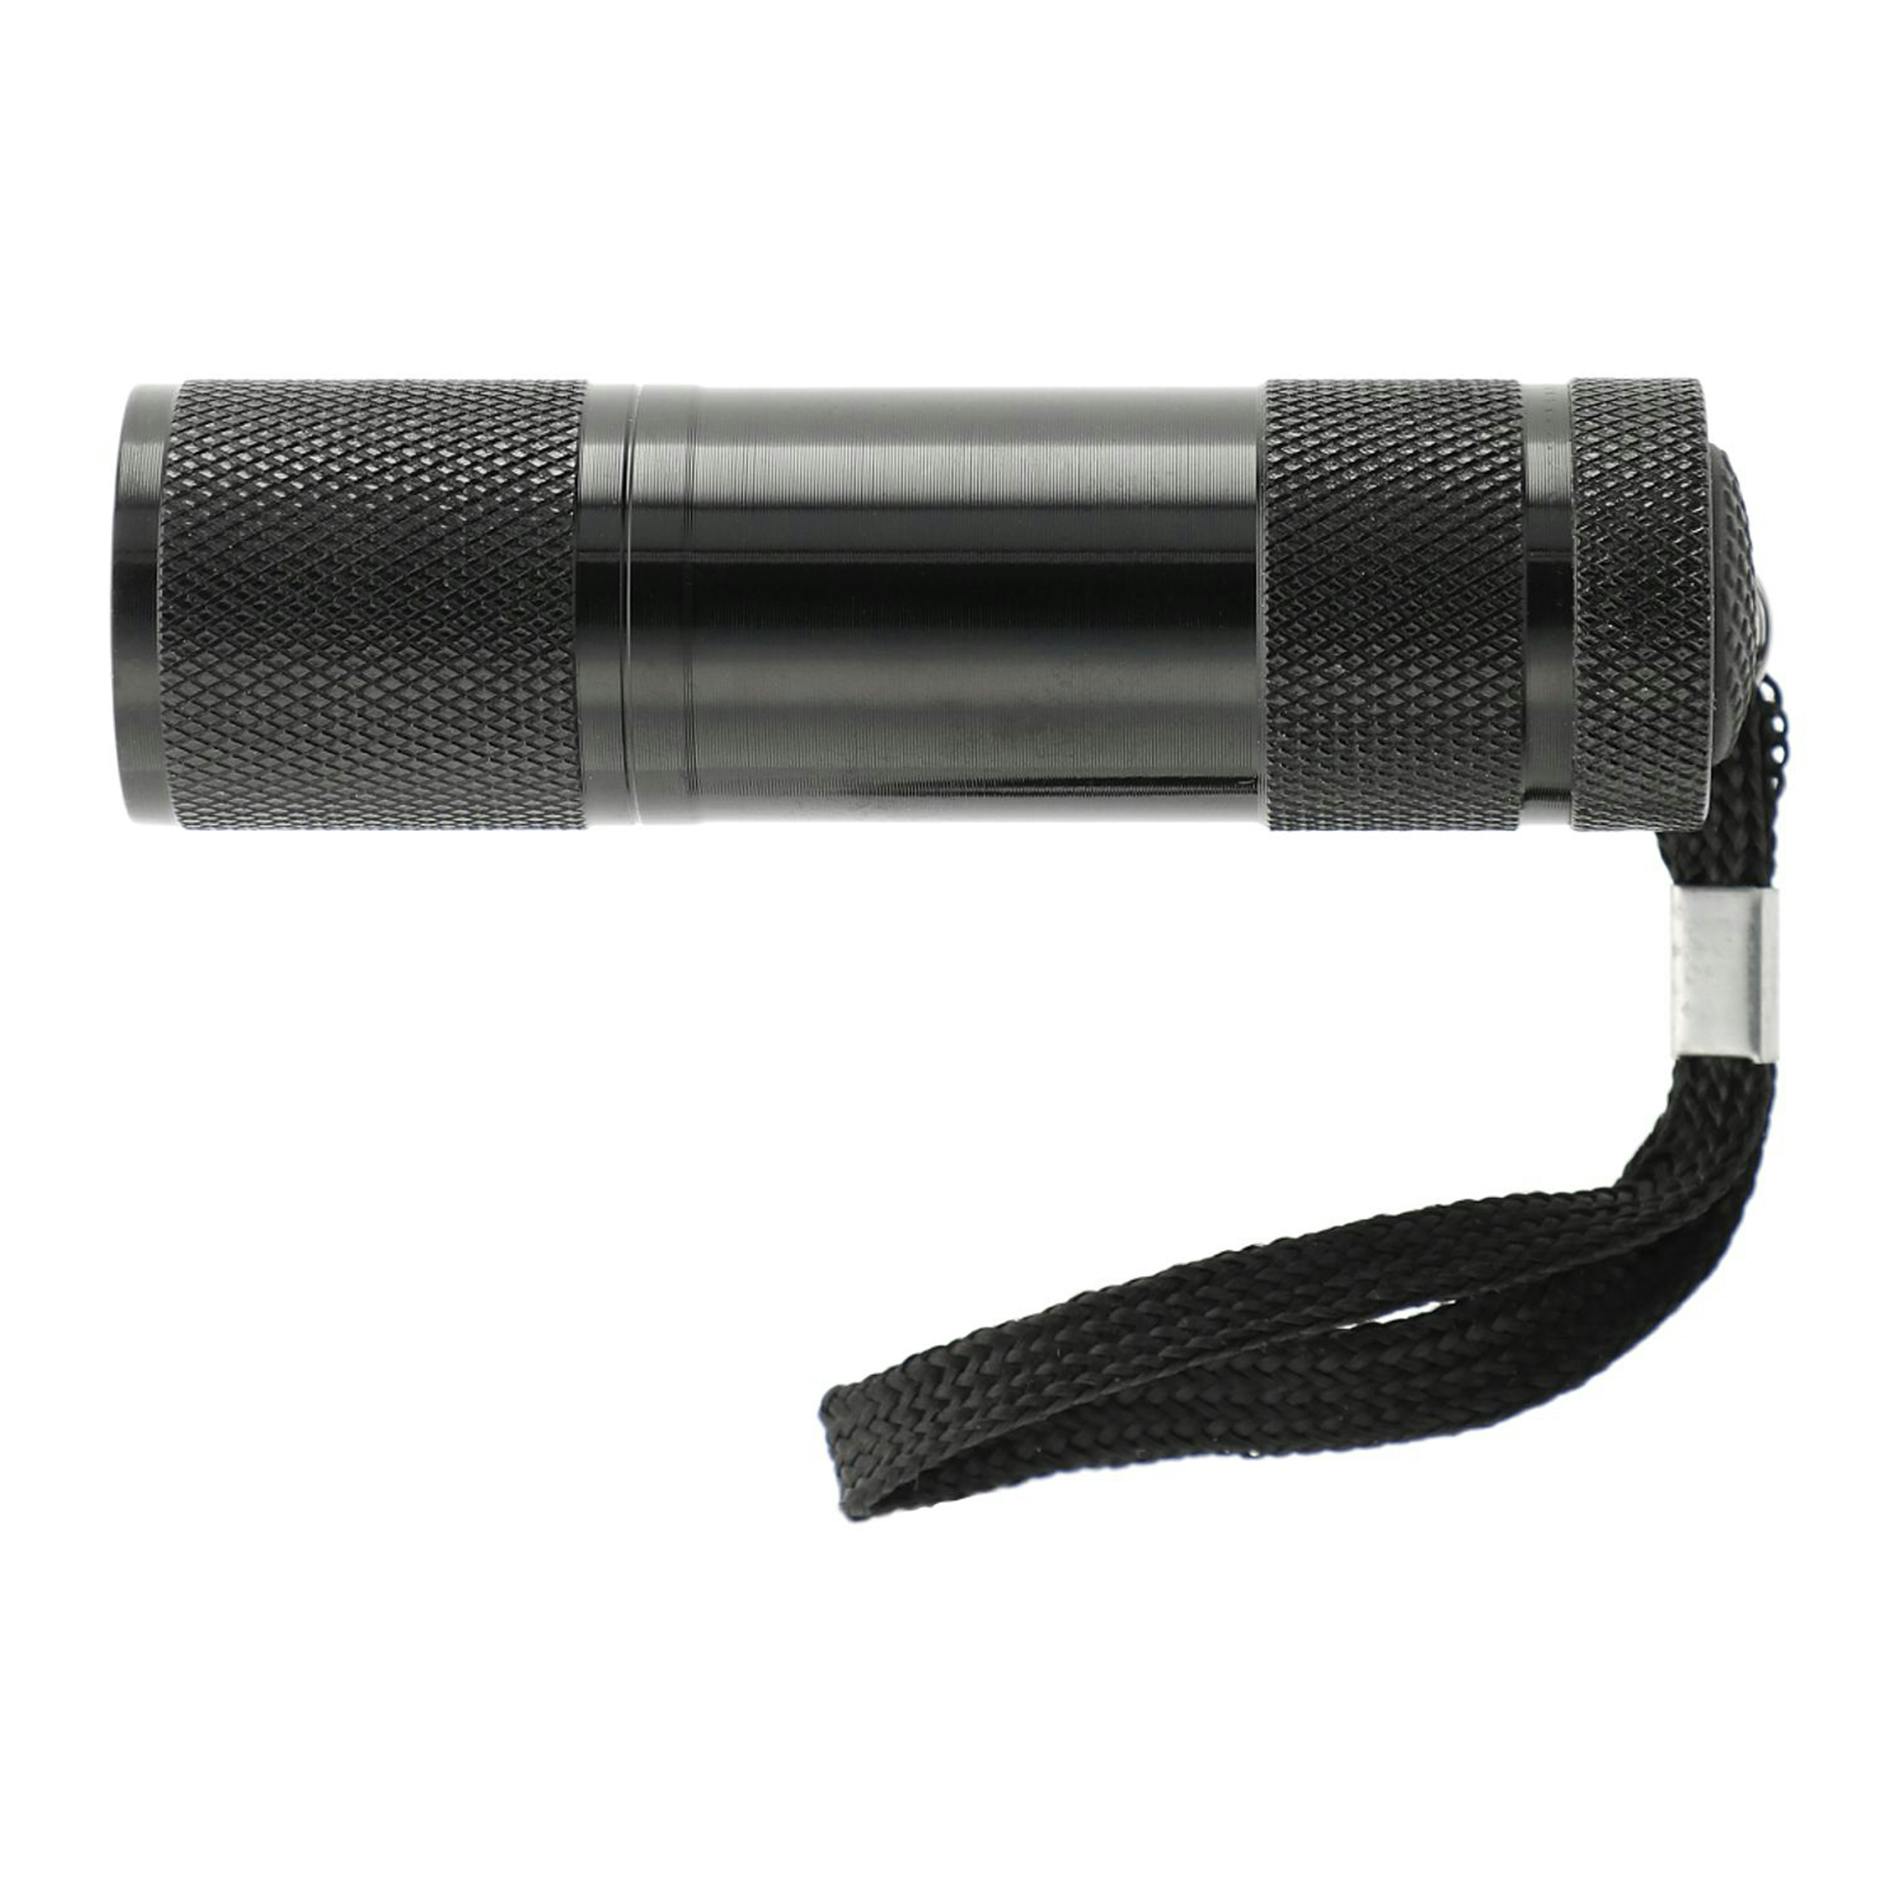 Gripper 9 LED Flashlight - additional Image 2